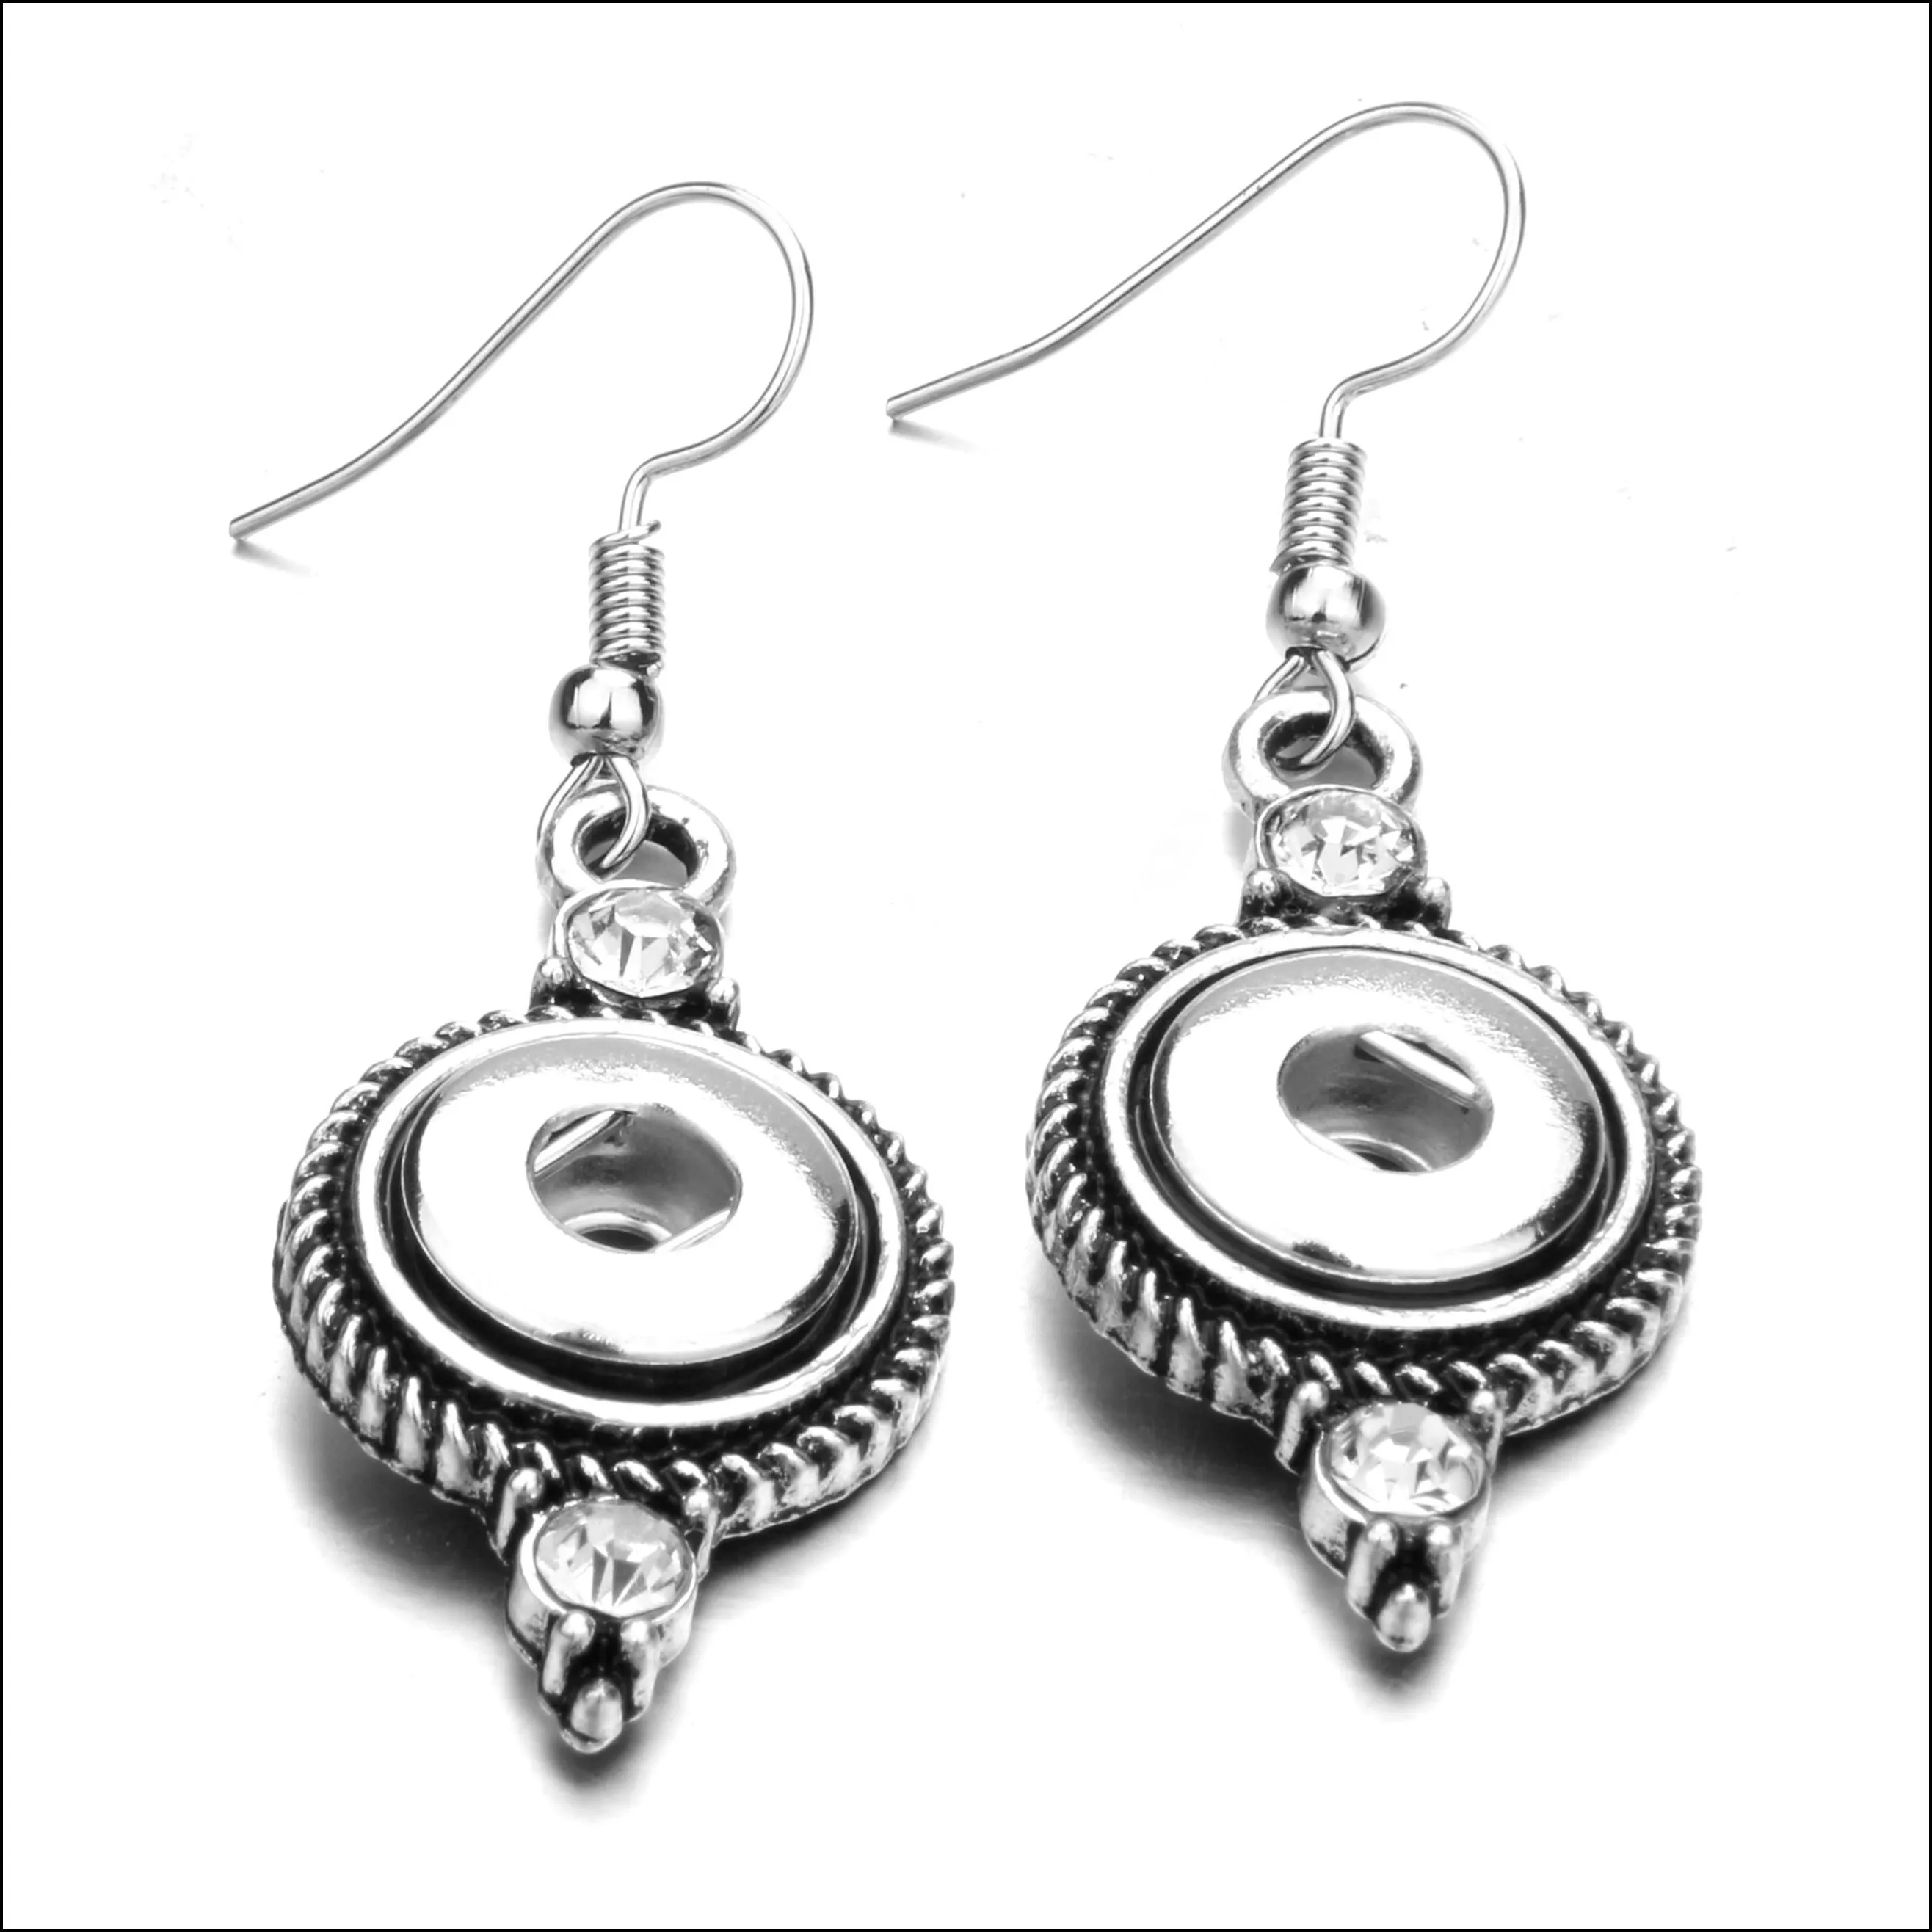 9 options noosa chunks 12mm ginger snap earrings jewelry vintage silver snap button drop earrings fashion snap earrings women person